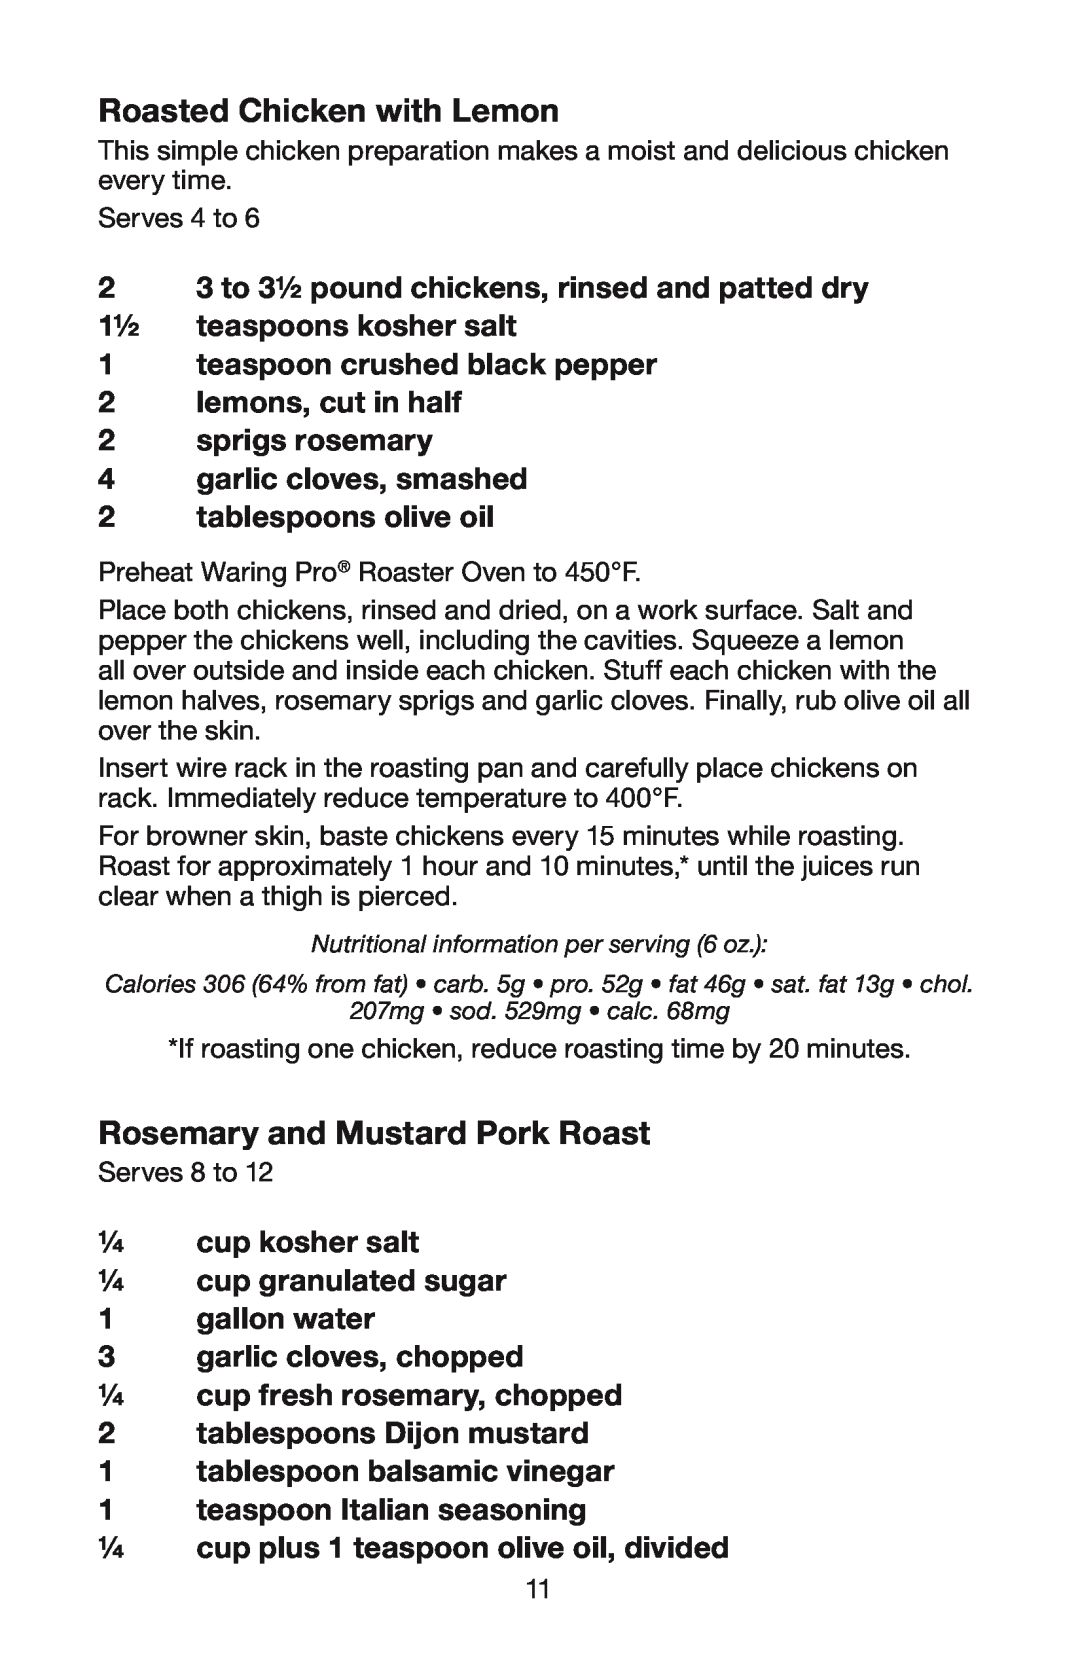 Waring RO18B manual Roasted Chicken with Lemon, Rosemary and Mustard Pork Roast, 1teaspoon crushed black pepper 